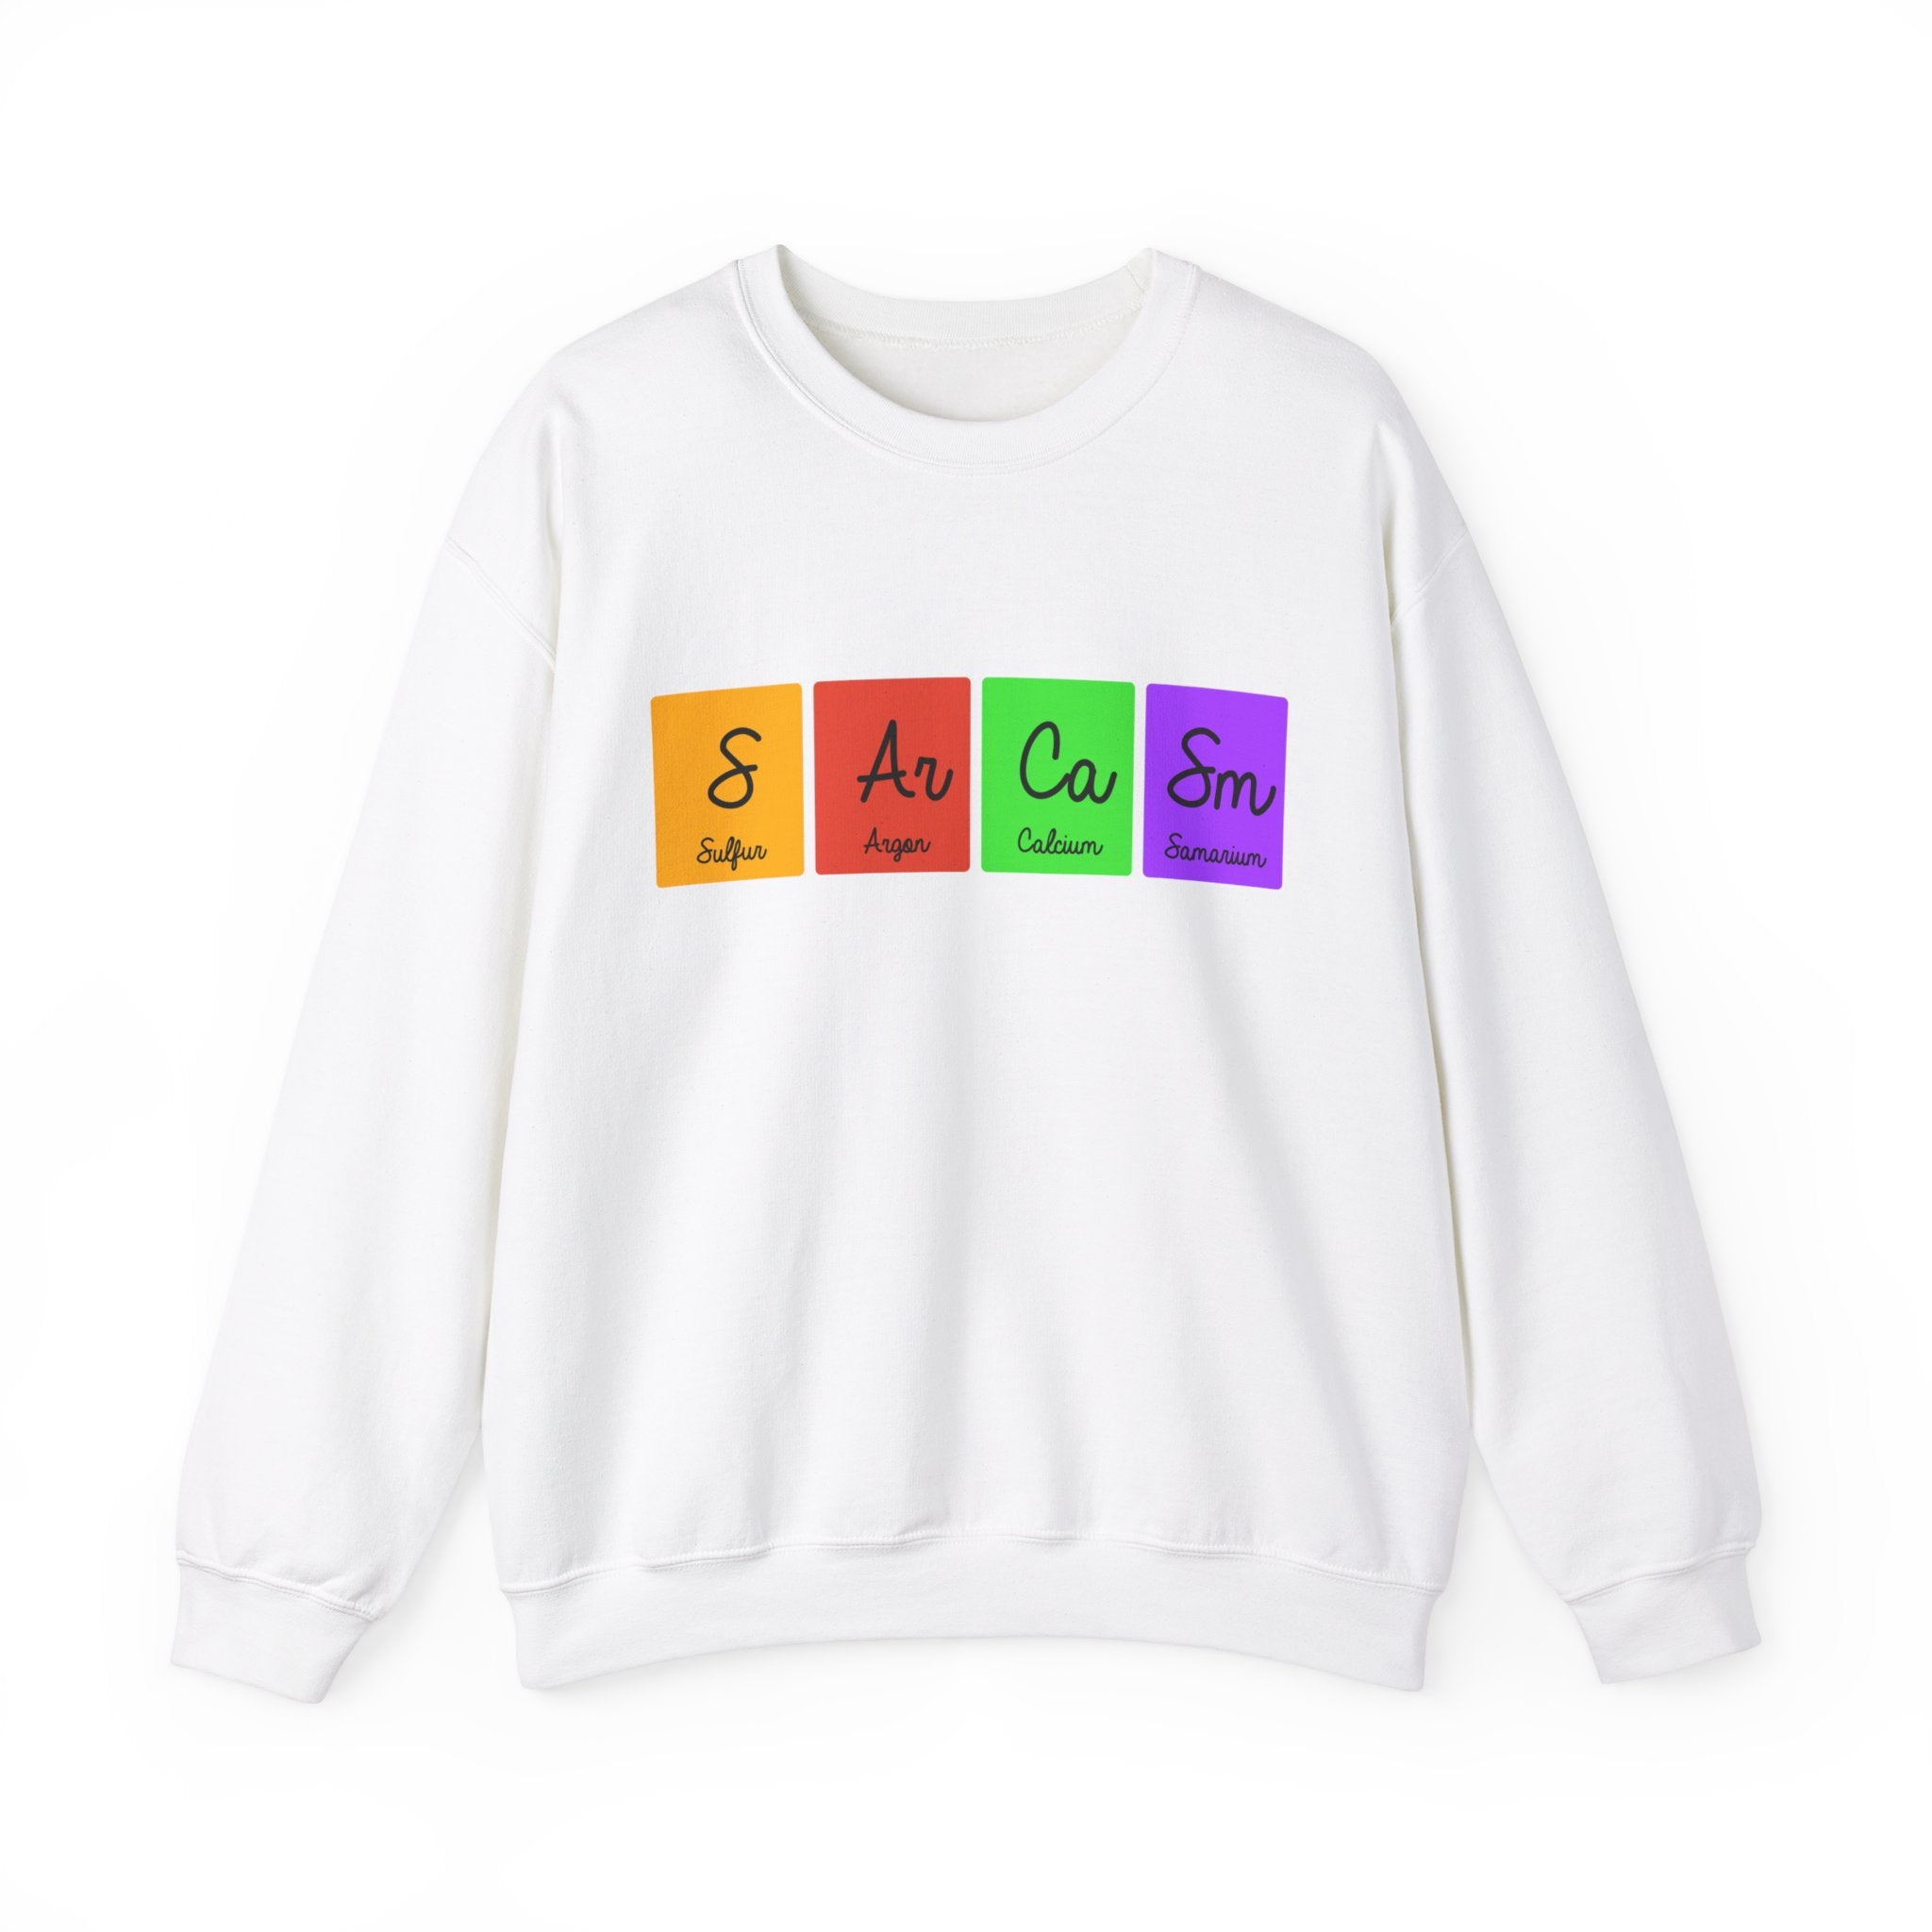 Cozy white S-Ar-Ca-Sm - Sweatshirt featuring a vibrant S-Ar-Ca-Sm design with periodic table elements: Sulfur (S) in yellow, Argon (Ar) in orange, Calcium (Ca) in green, and Einsteinium (Sm) in purple.